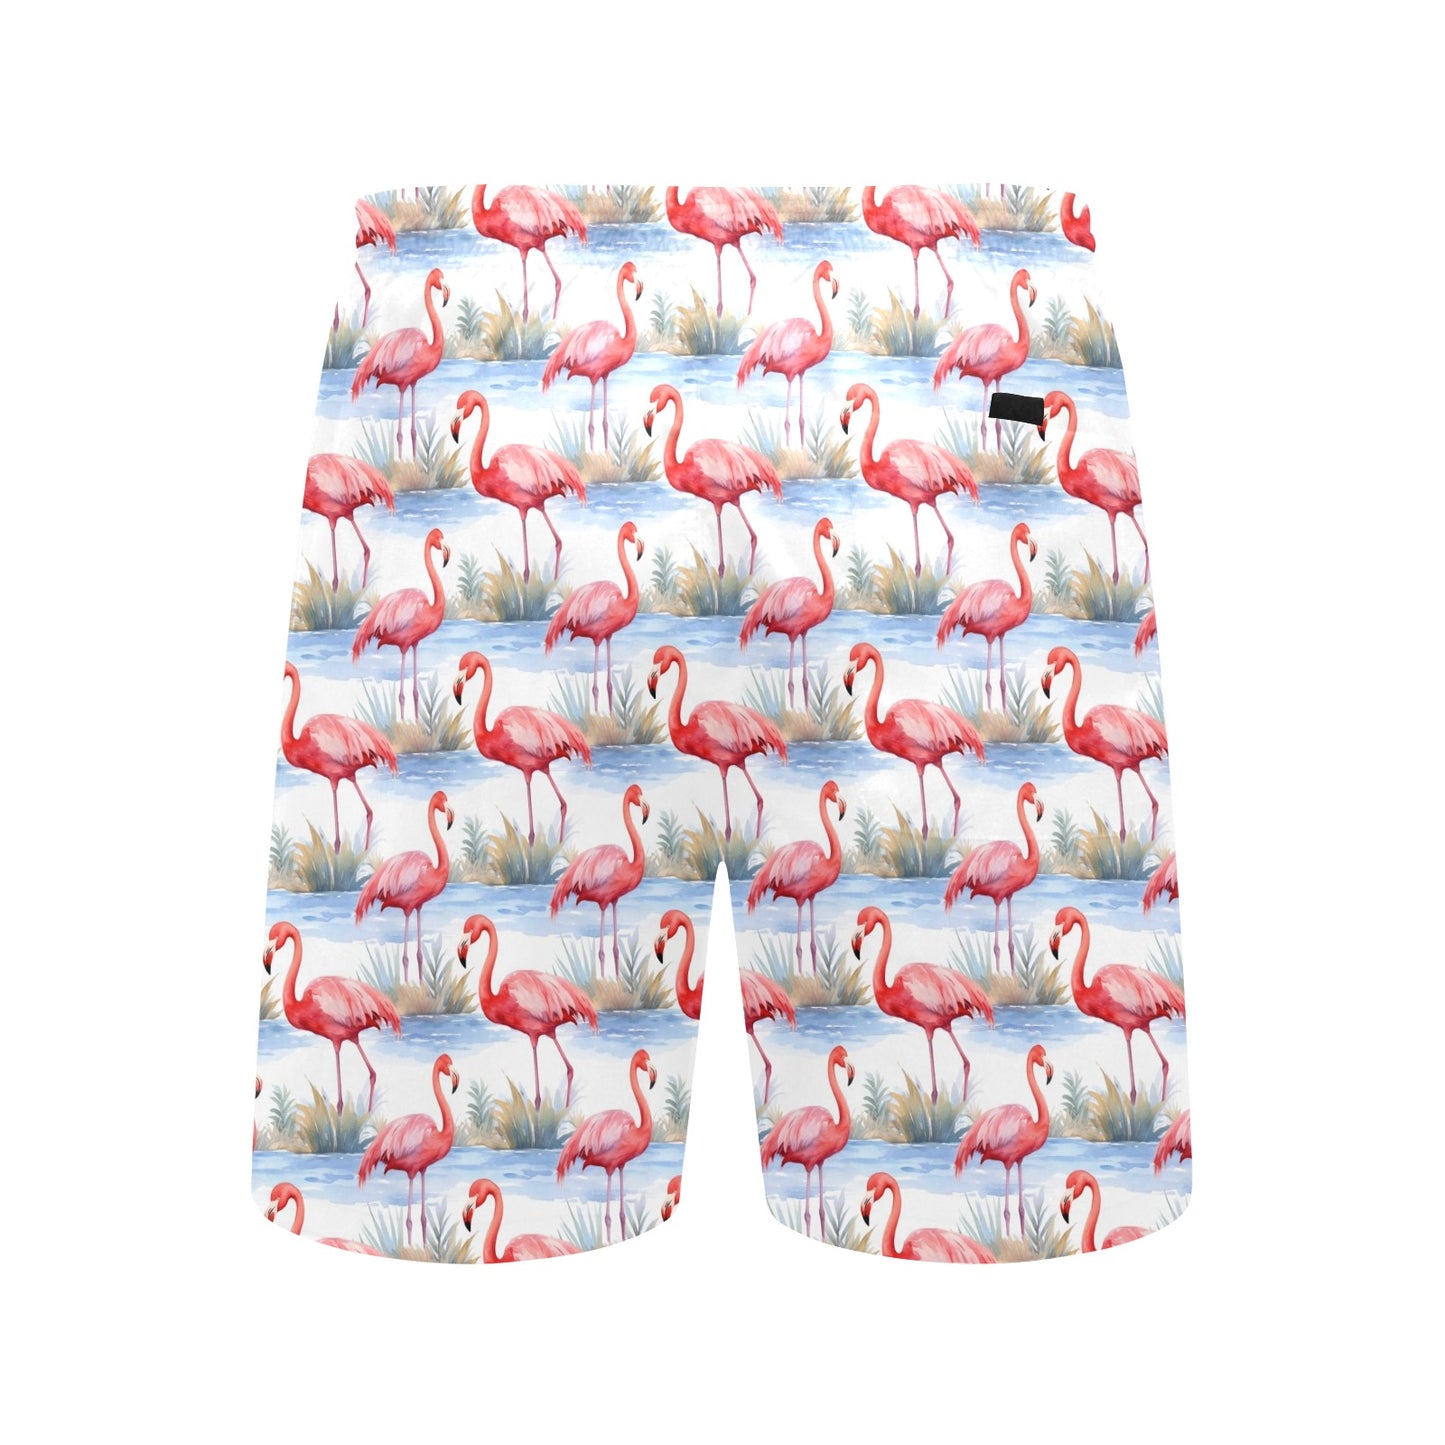 Pink Flamingo Men Swim Trunks Shorts, Watercolor Print Beach 7 Inch Inseam Front Back Pockets Mesh Drawstring Swimsuit Bathing Suit Summer Starcove Fashion